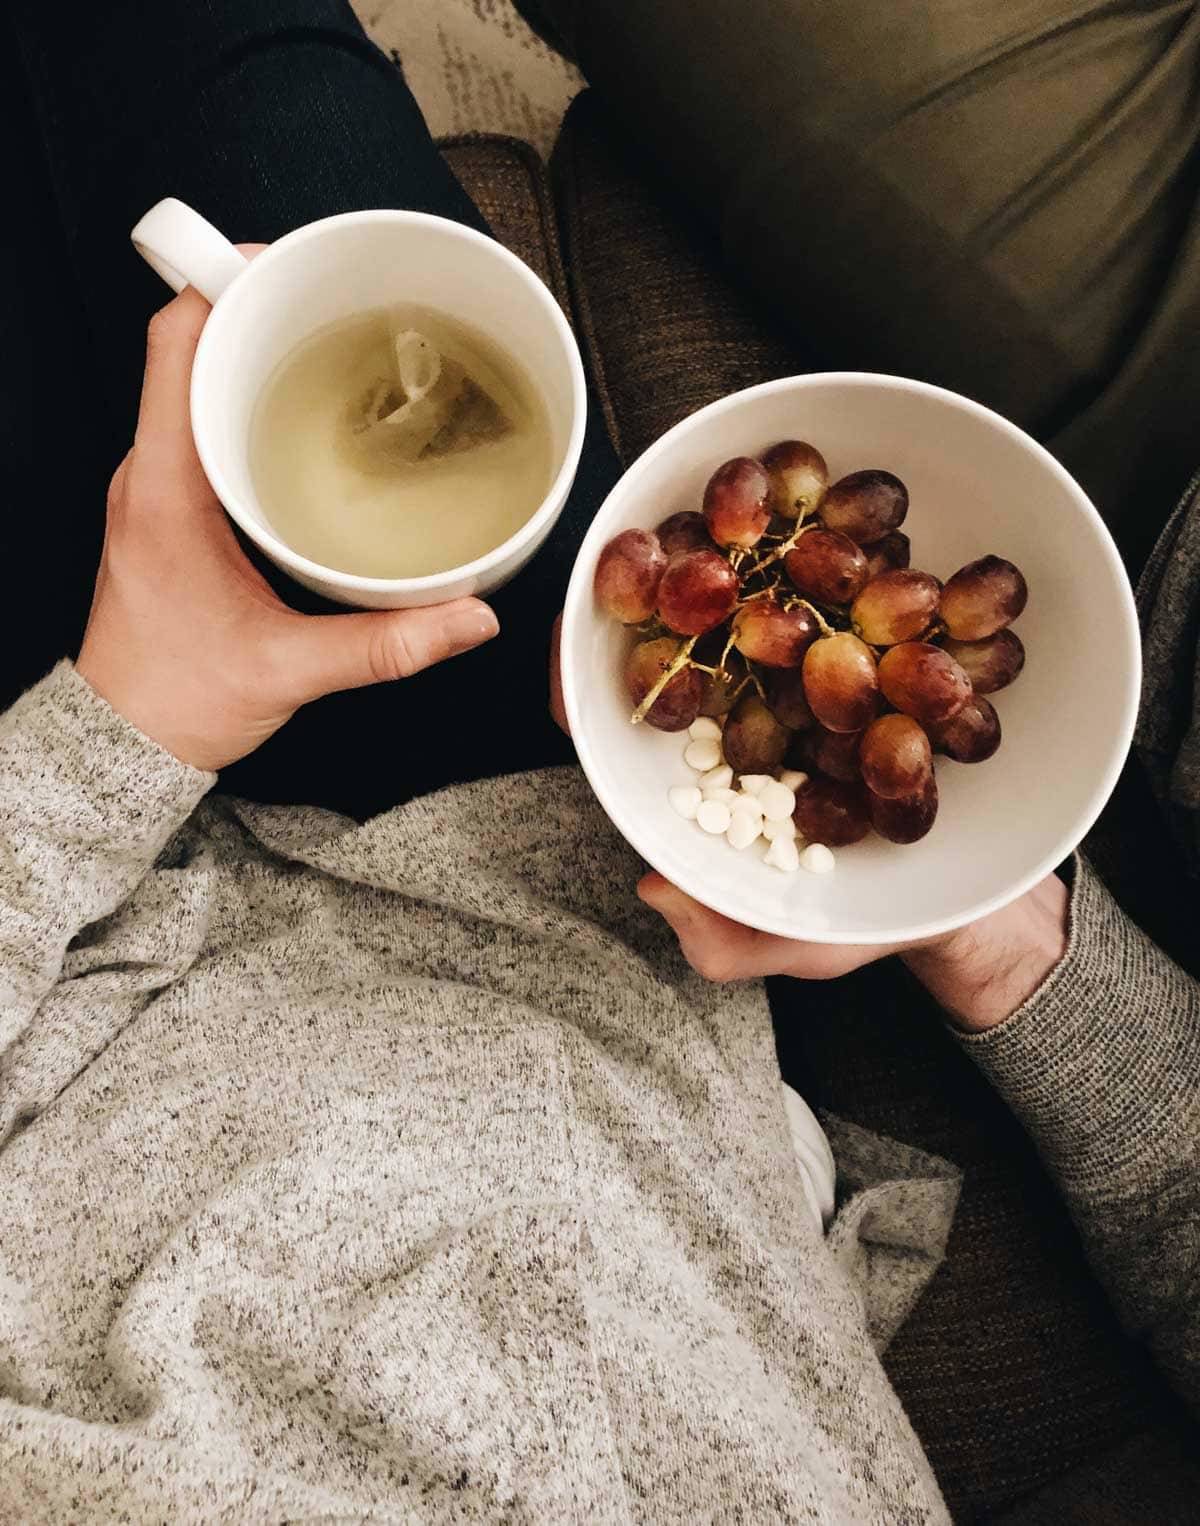 Mug of tea and bowl of grapes.